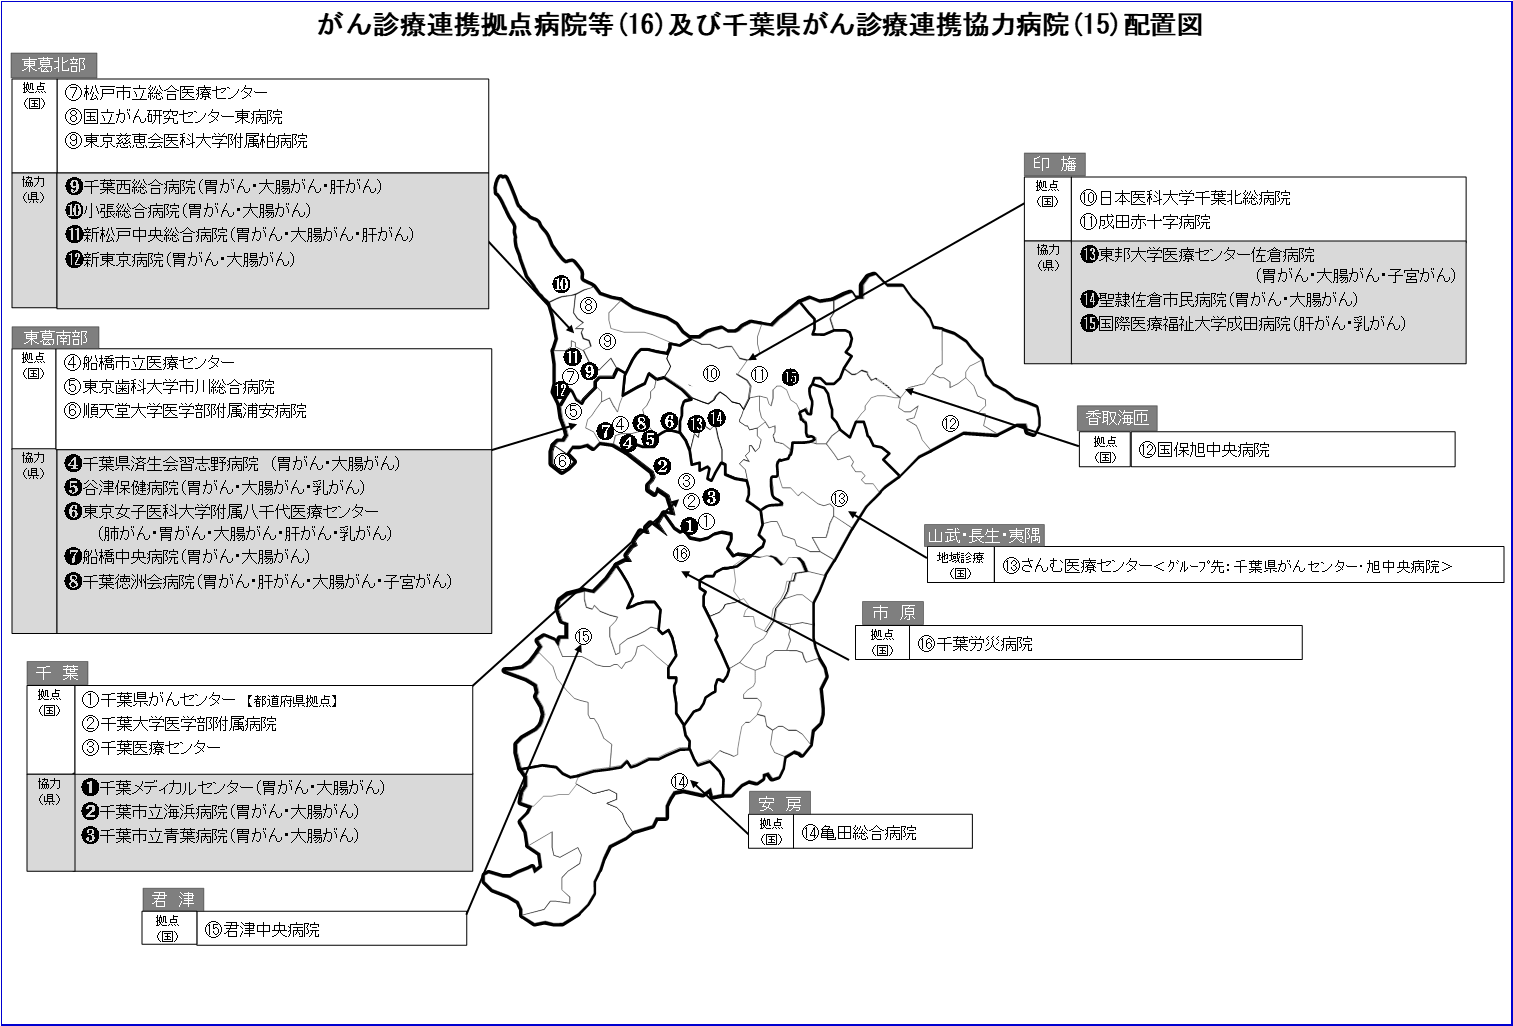 がん診療連携拠点病院等及び千葉県がん診療連携協力病院配置図